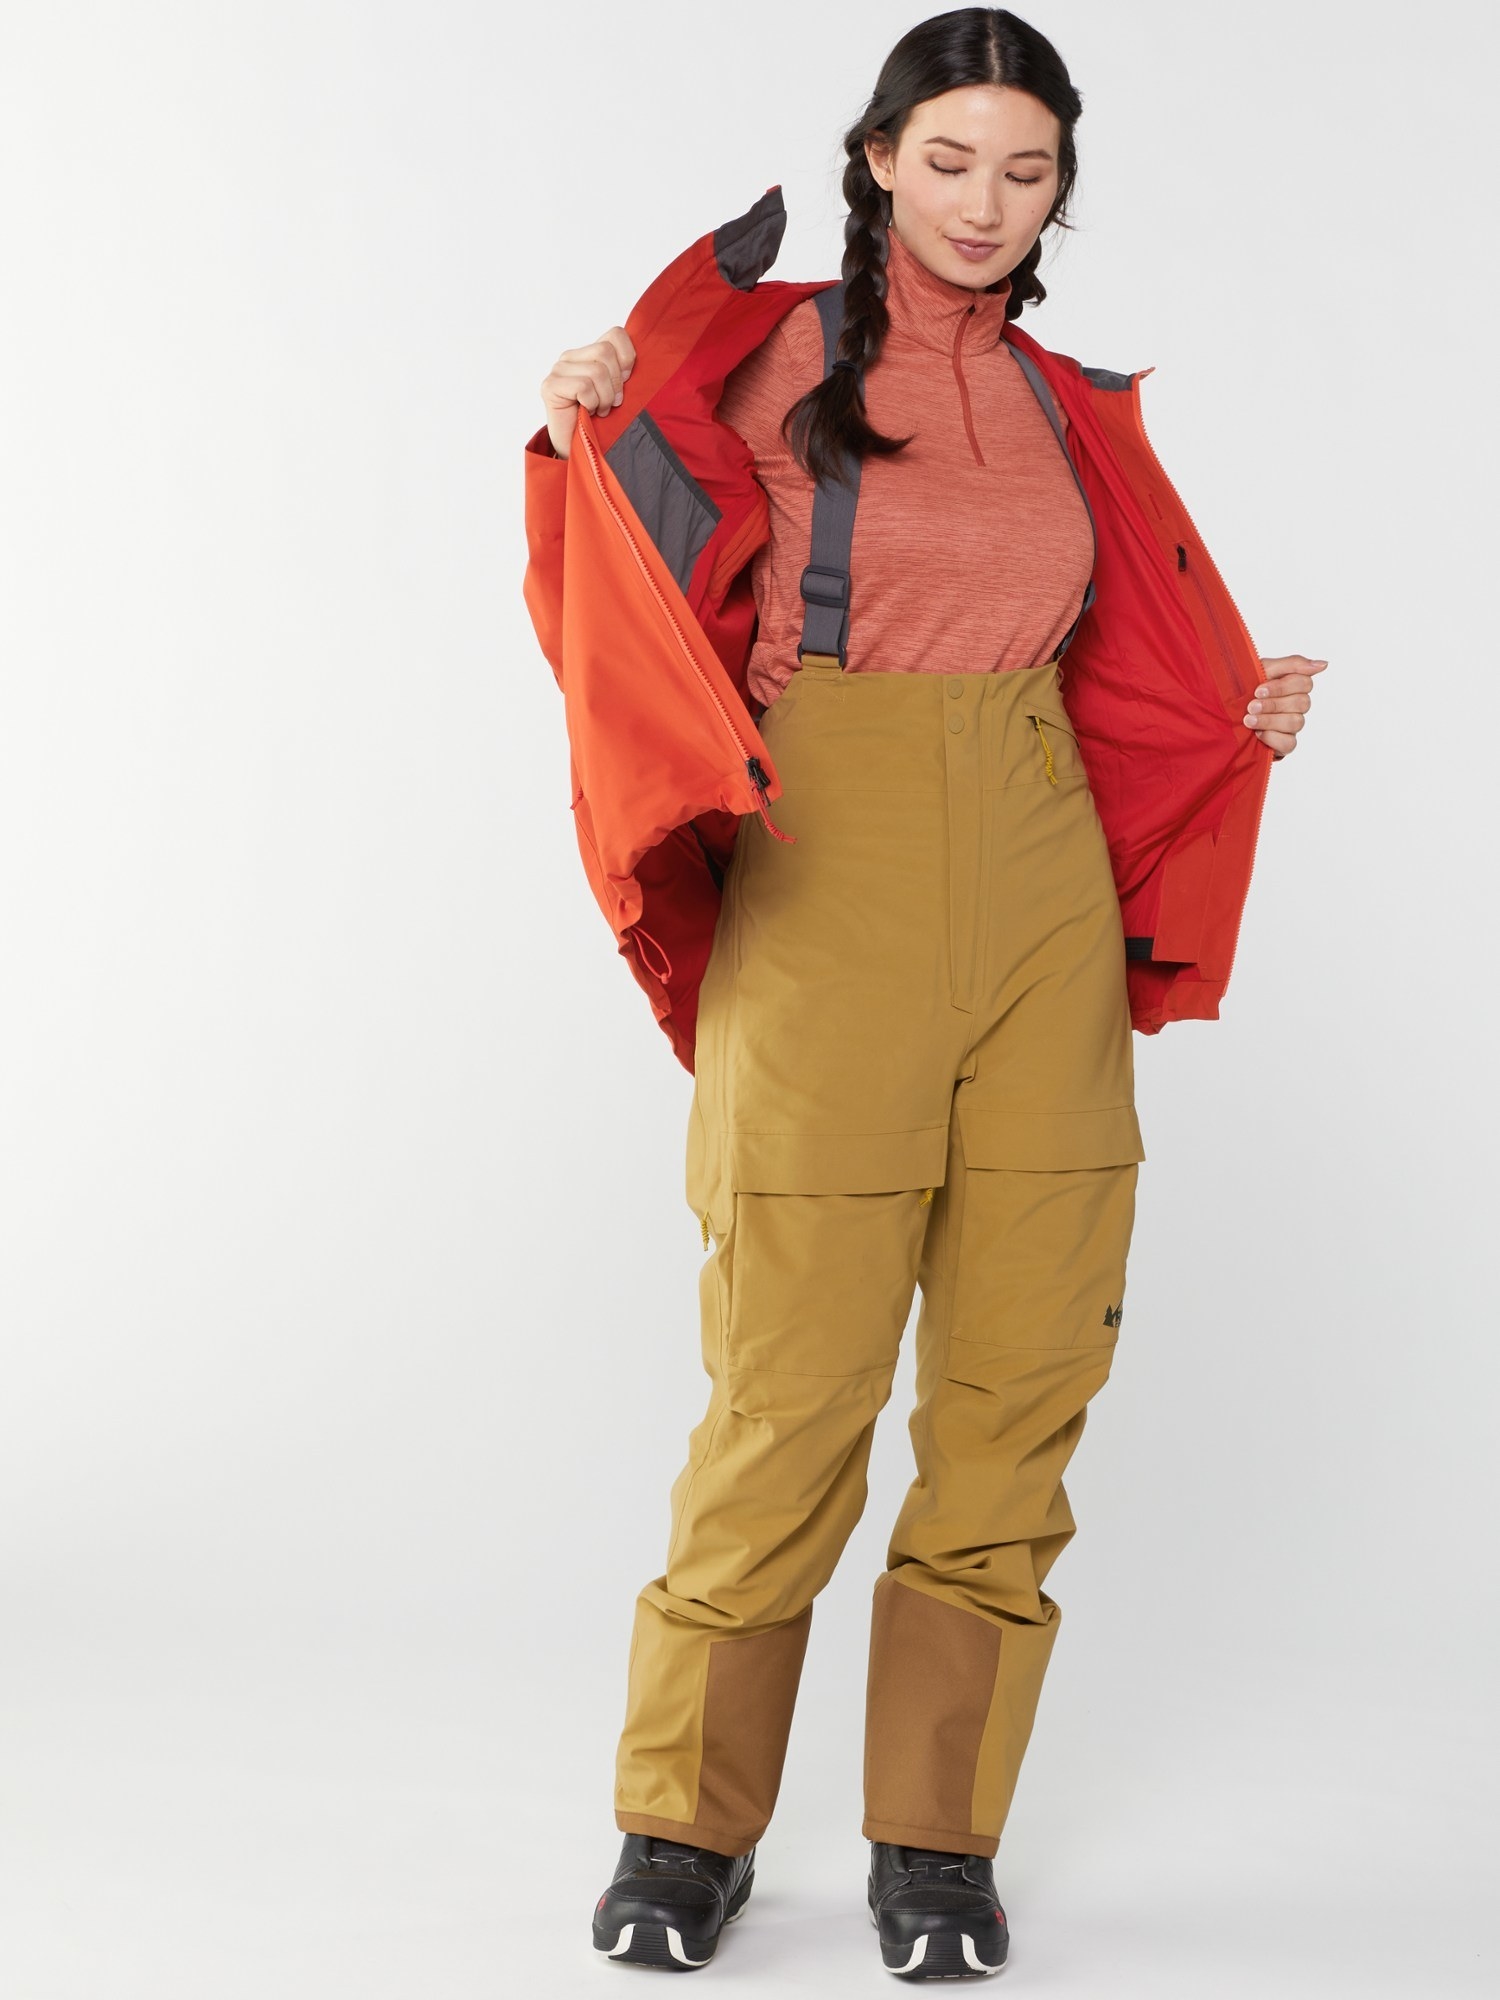 Model wearing the orange ski jacket over base layers and ski bibs